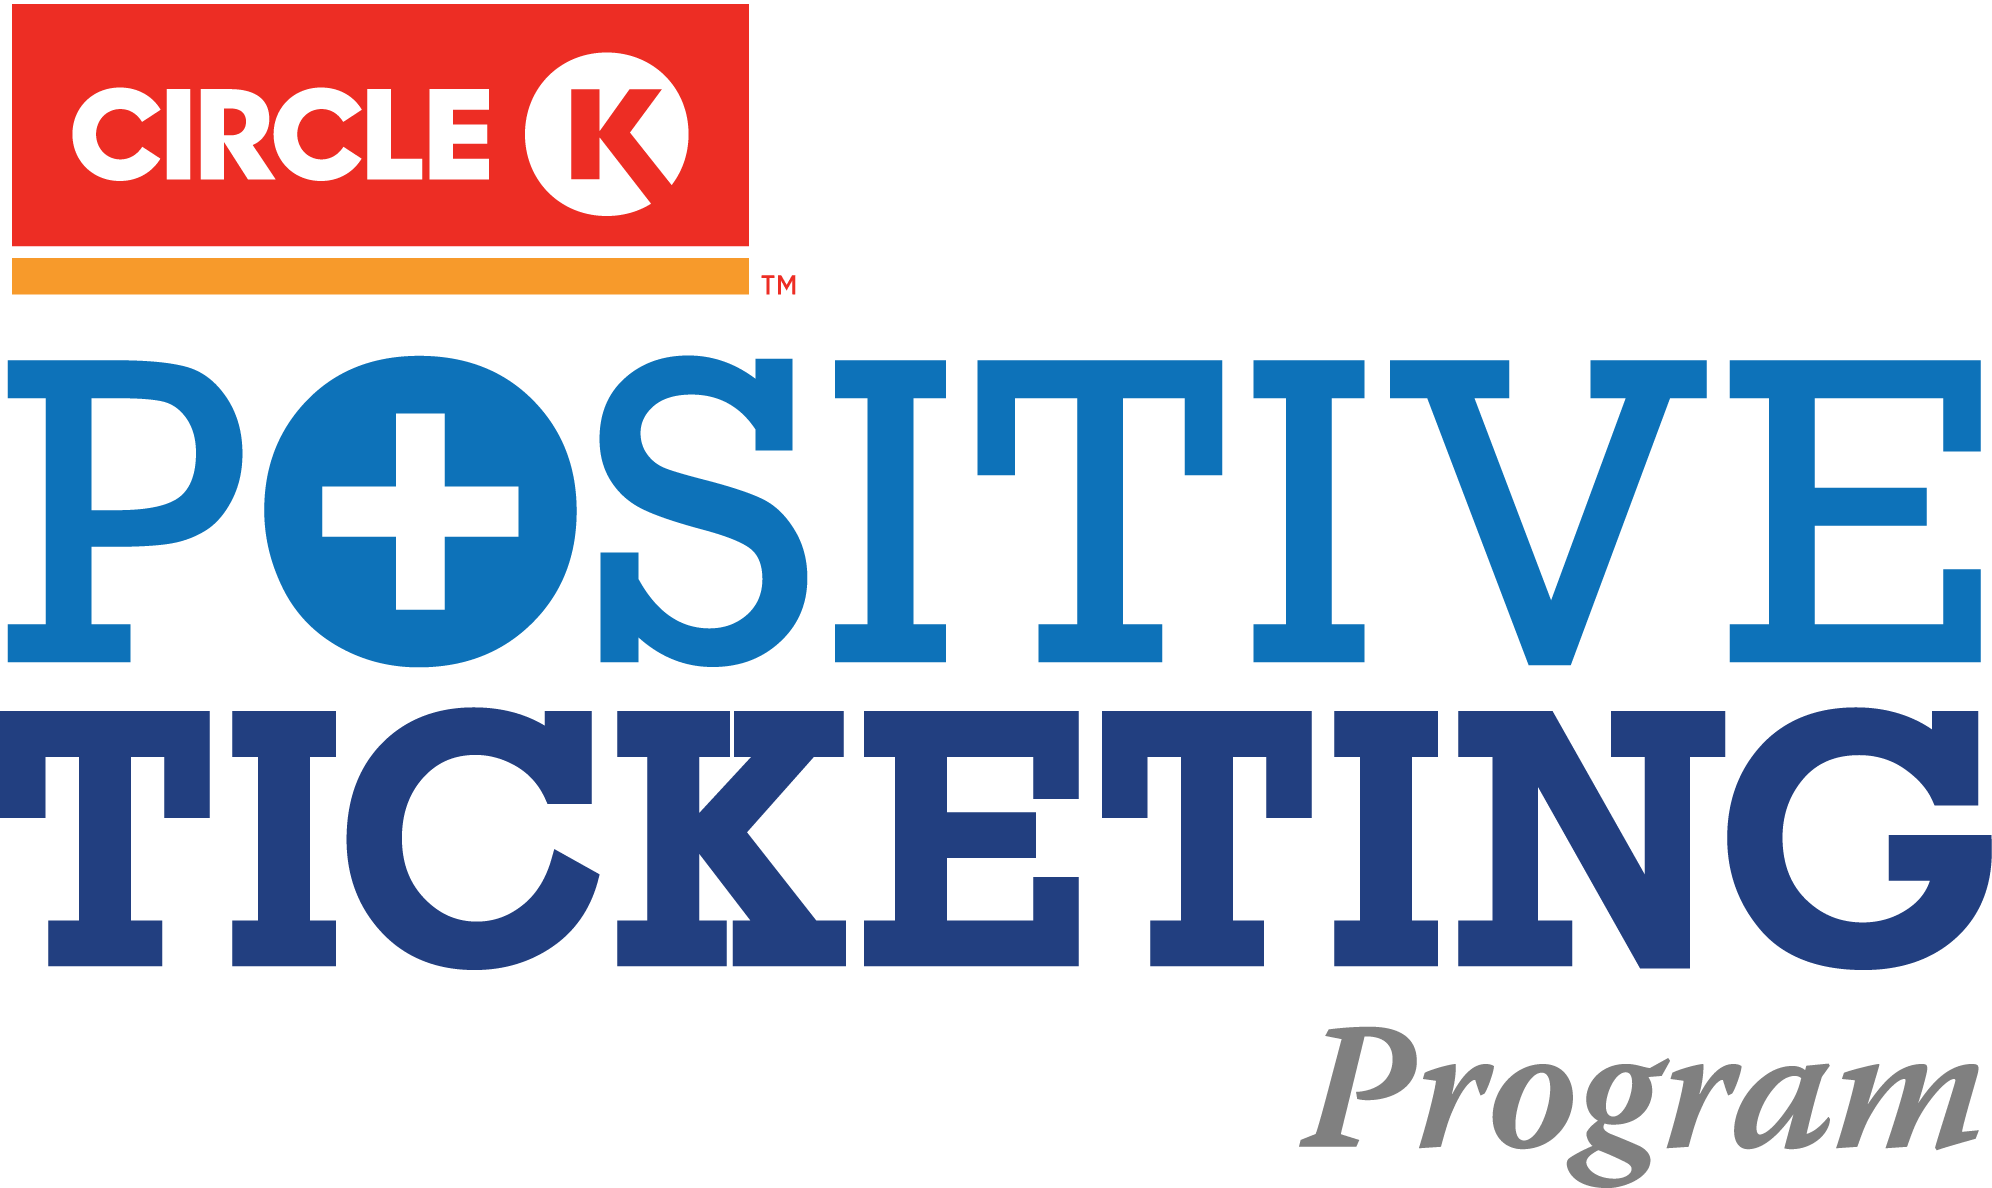 Positive Ticketing Program